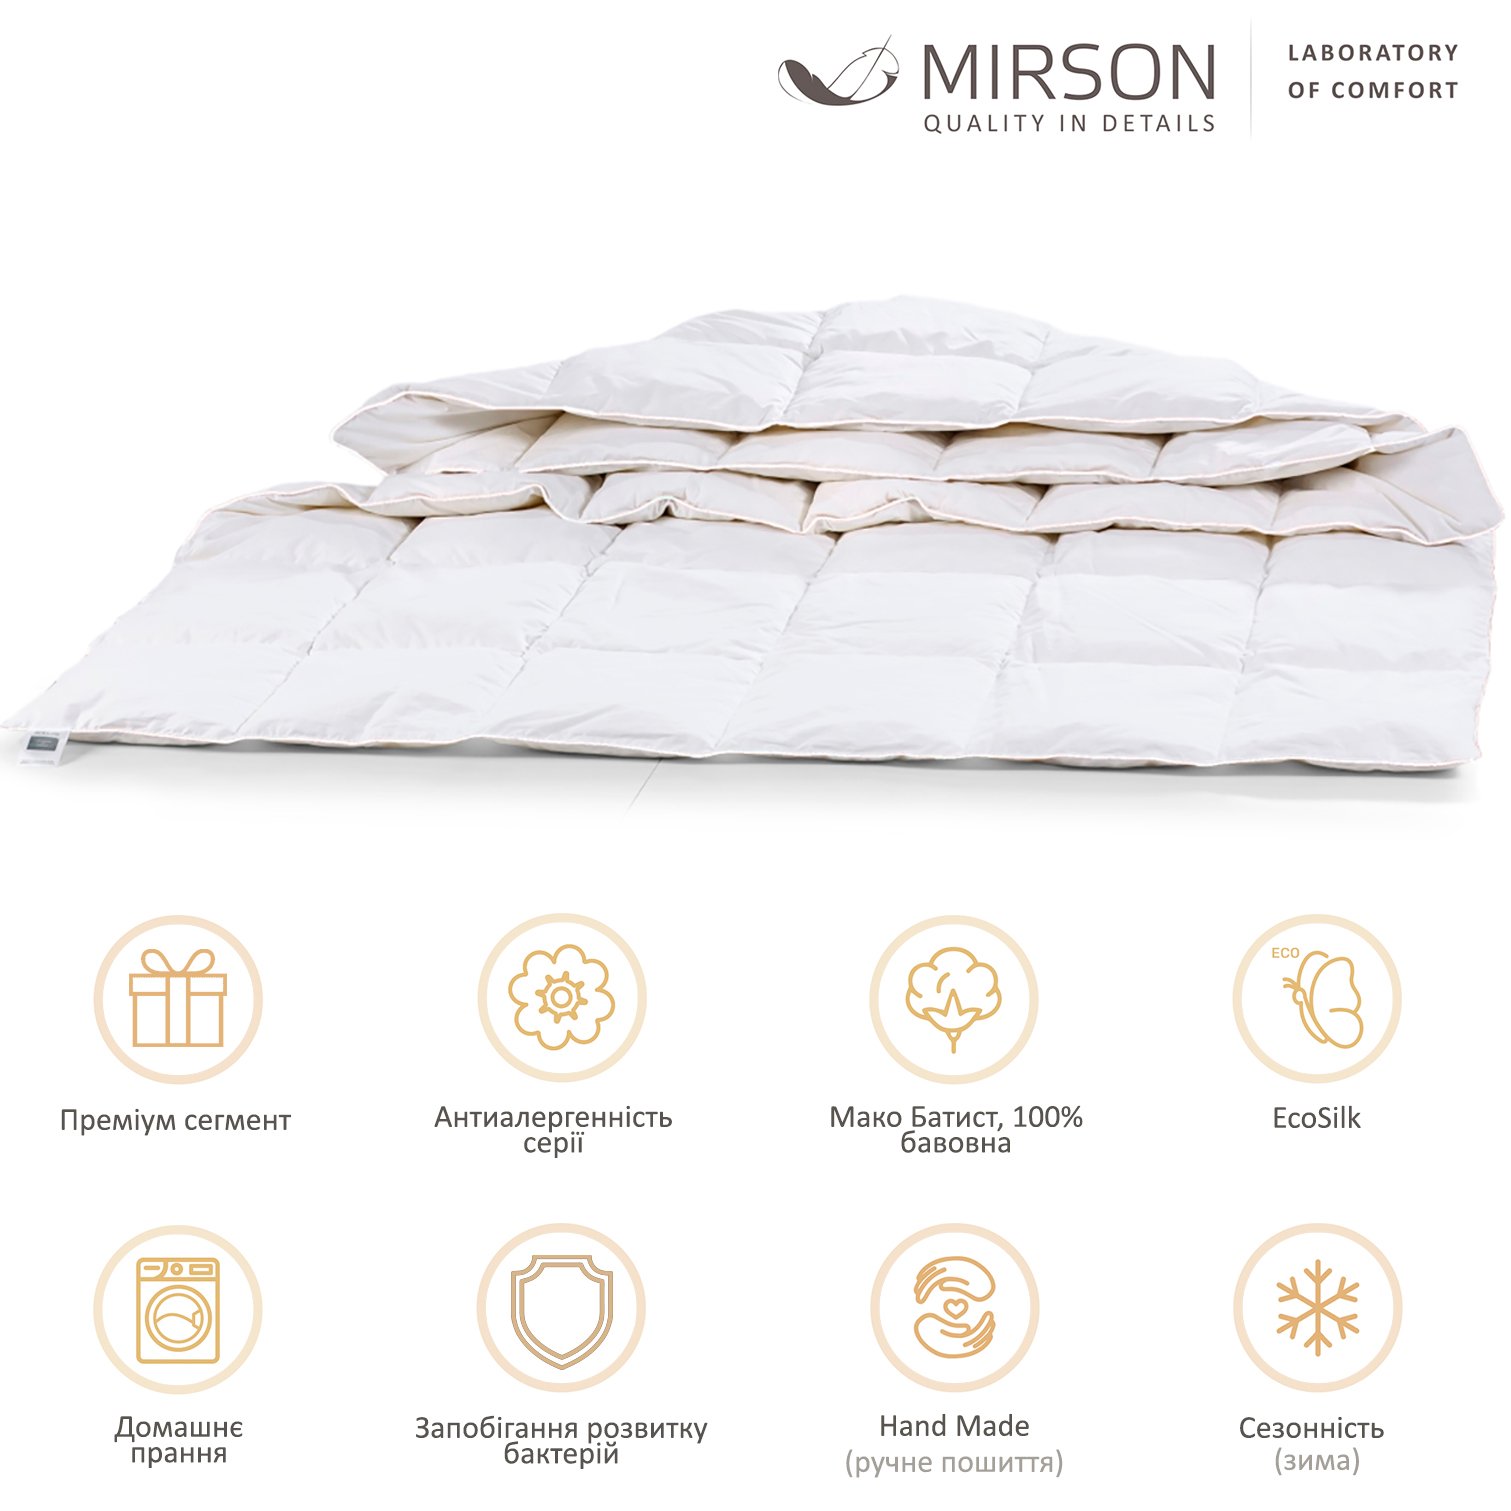 Ковдра антиалергенна MirSon Luxury Exclusive EcoSilk №1317, зимова, 140x205 см, біла (237054439) - фото 5